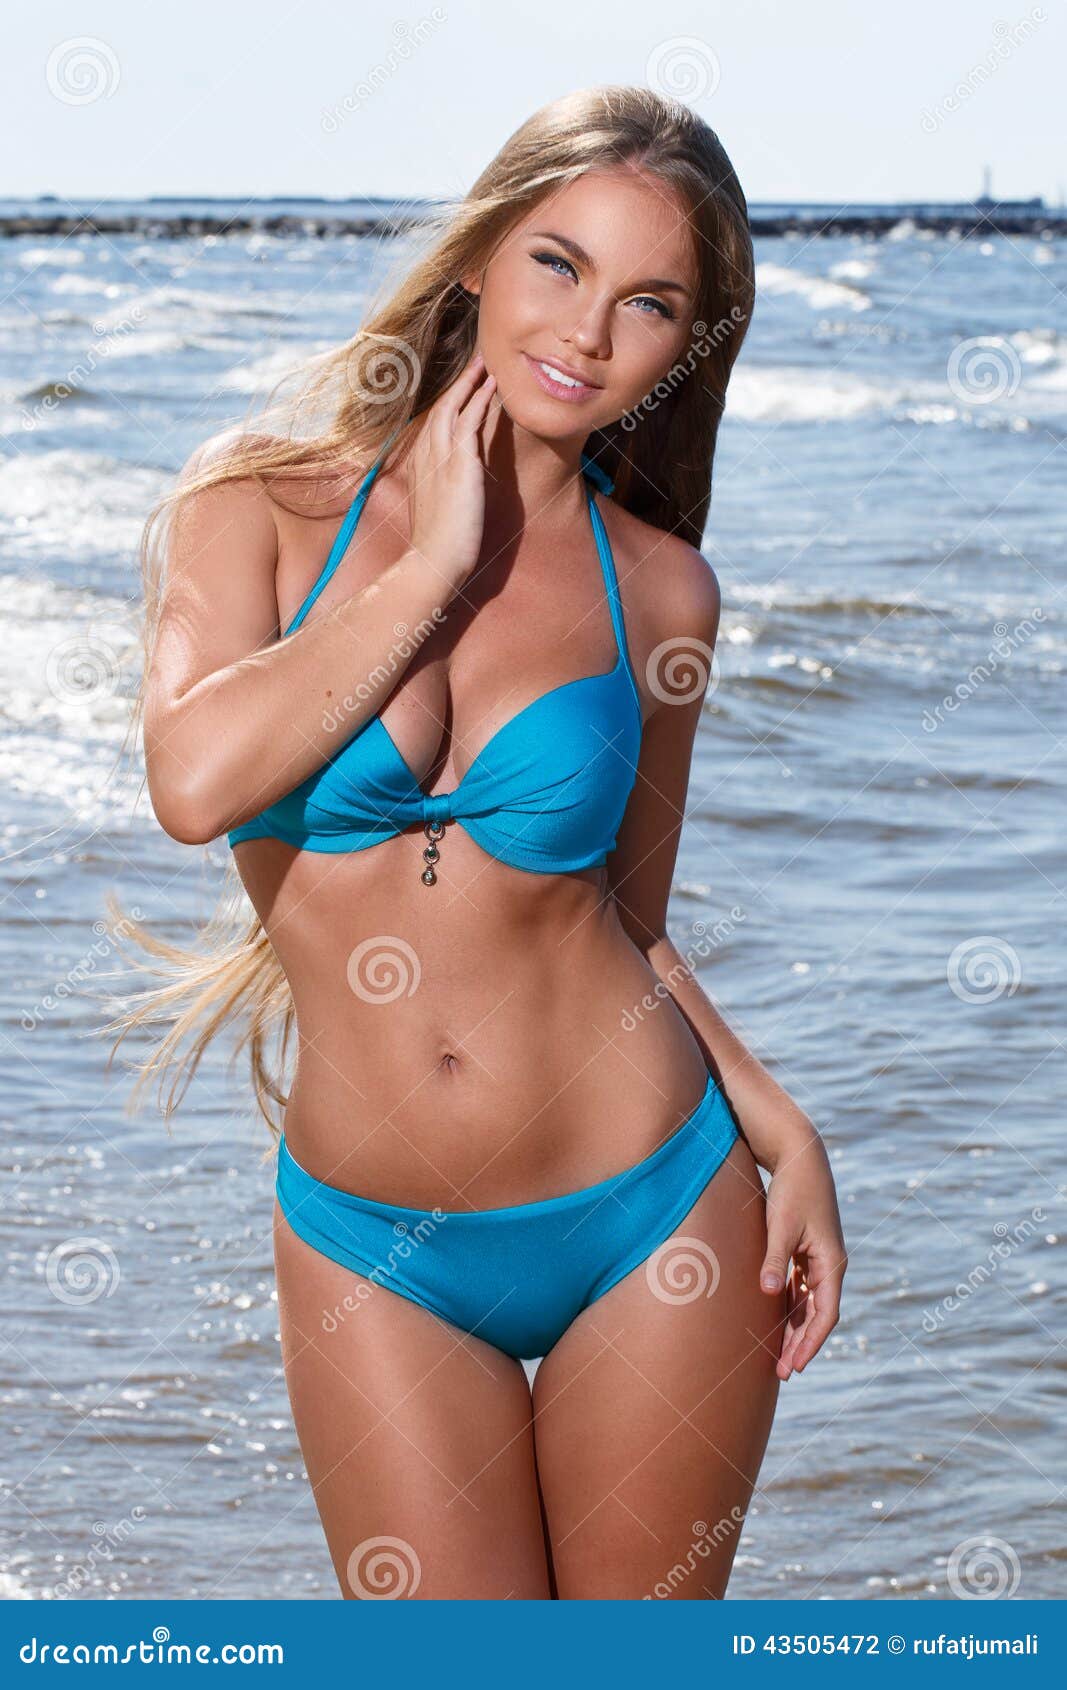 almendra sanchez add hot girl on the beach photo